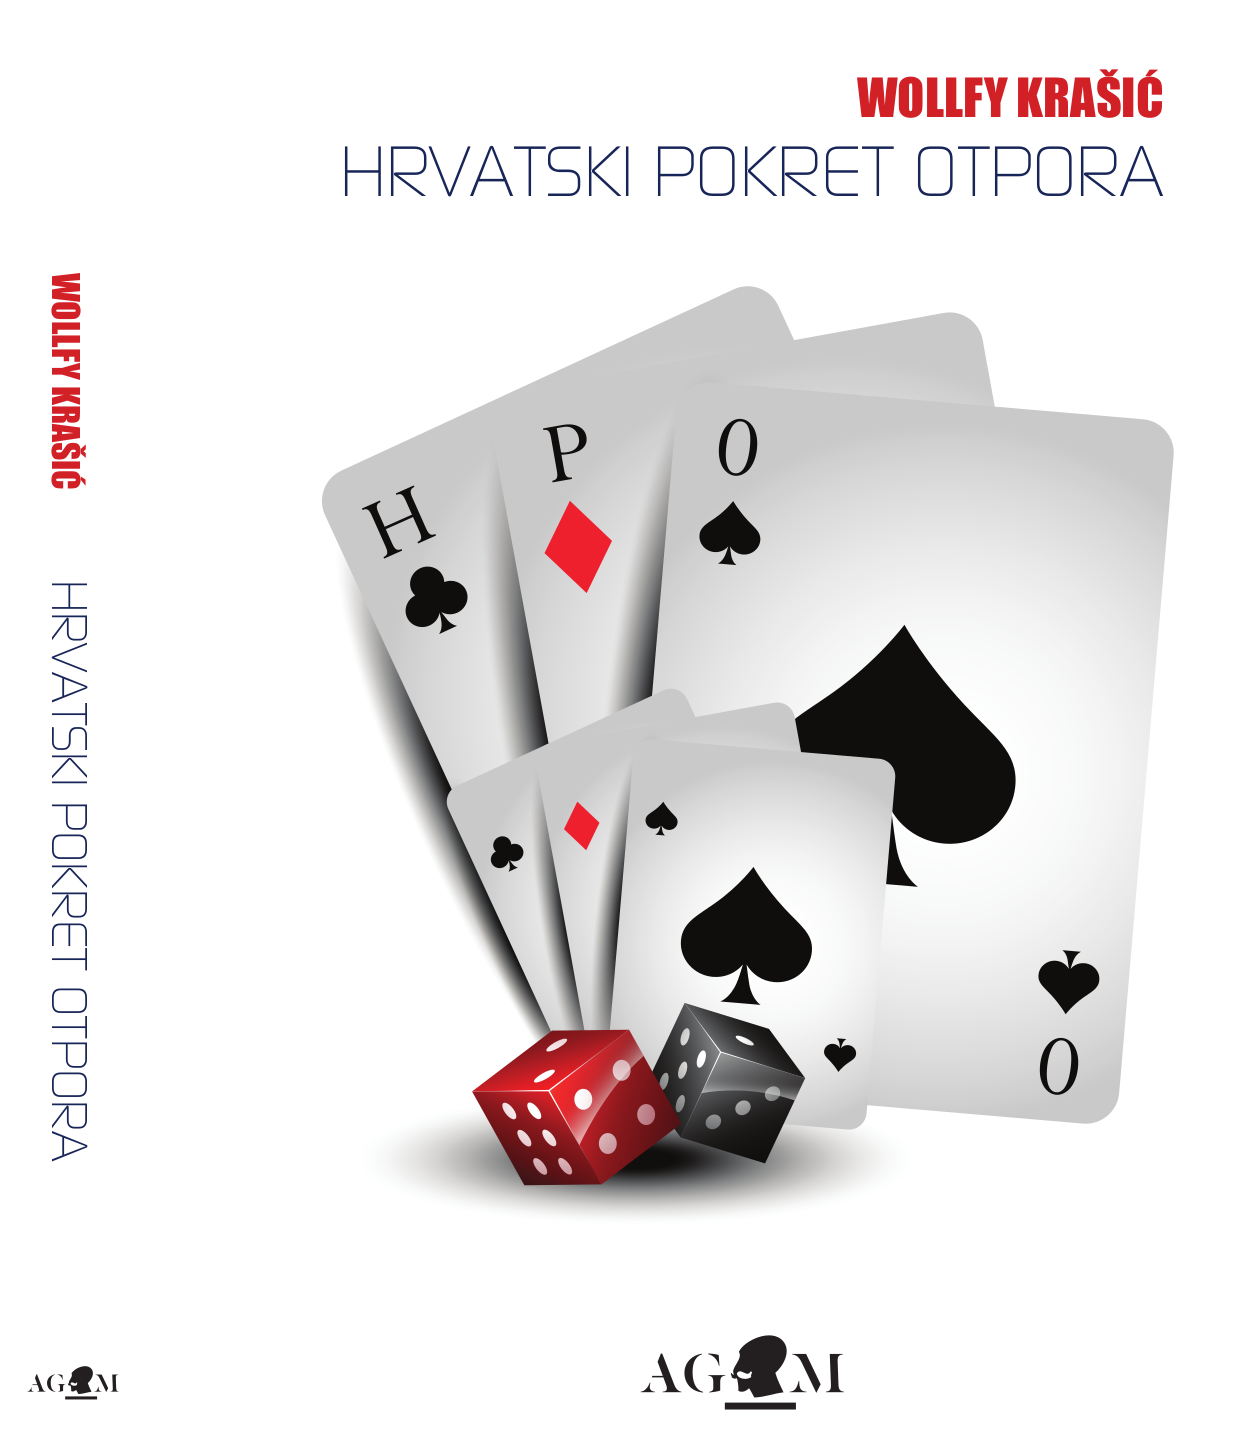 Hrvatski pokret otpora, naslovnica